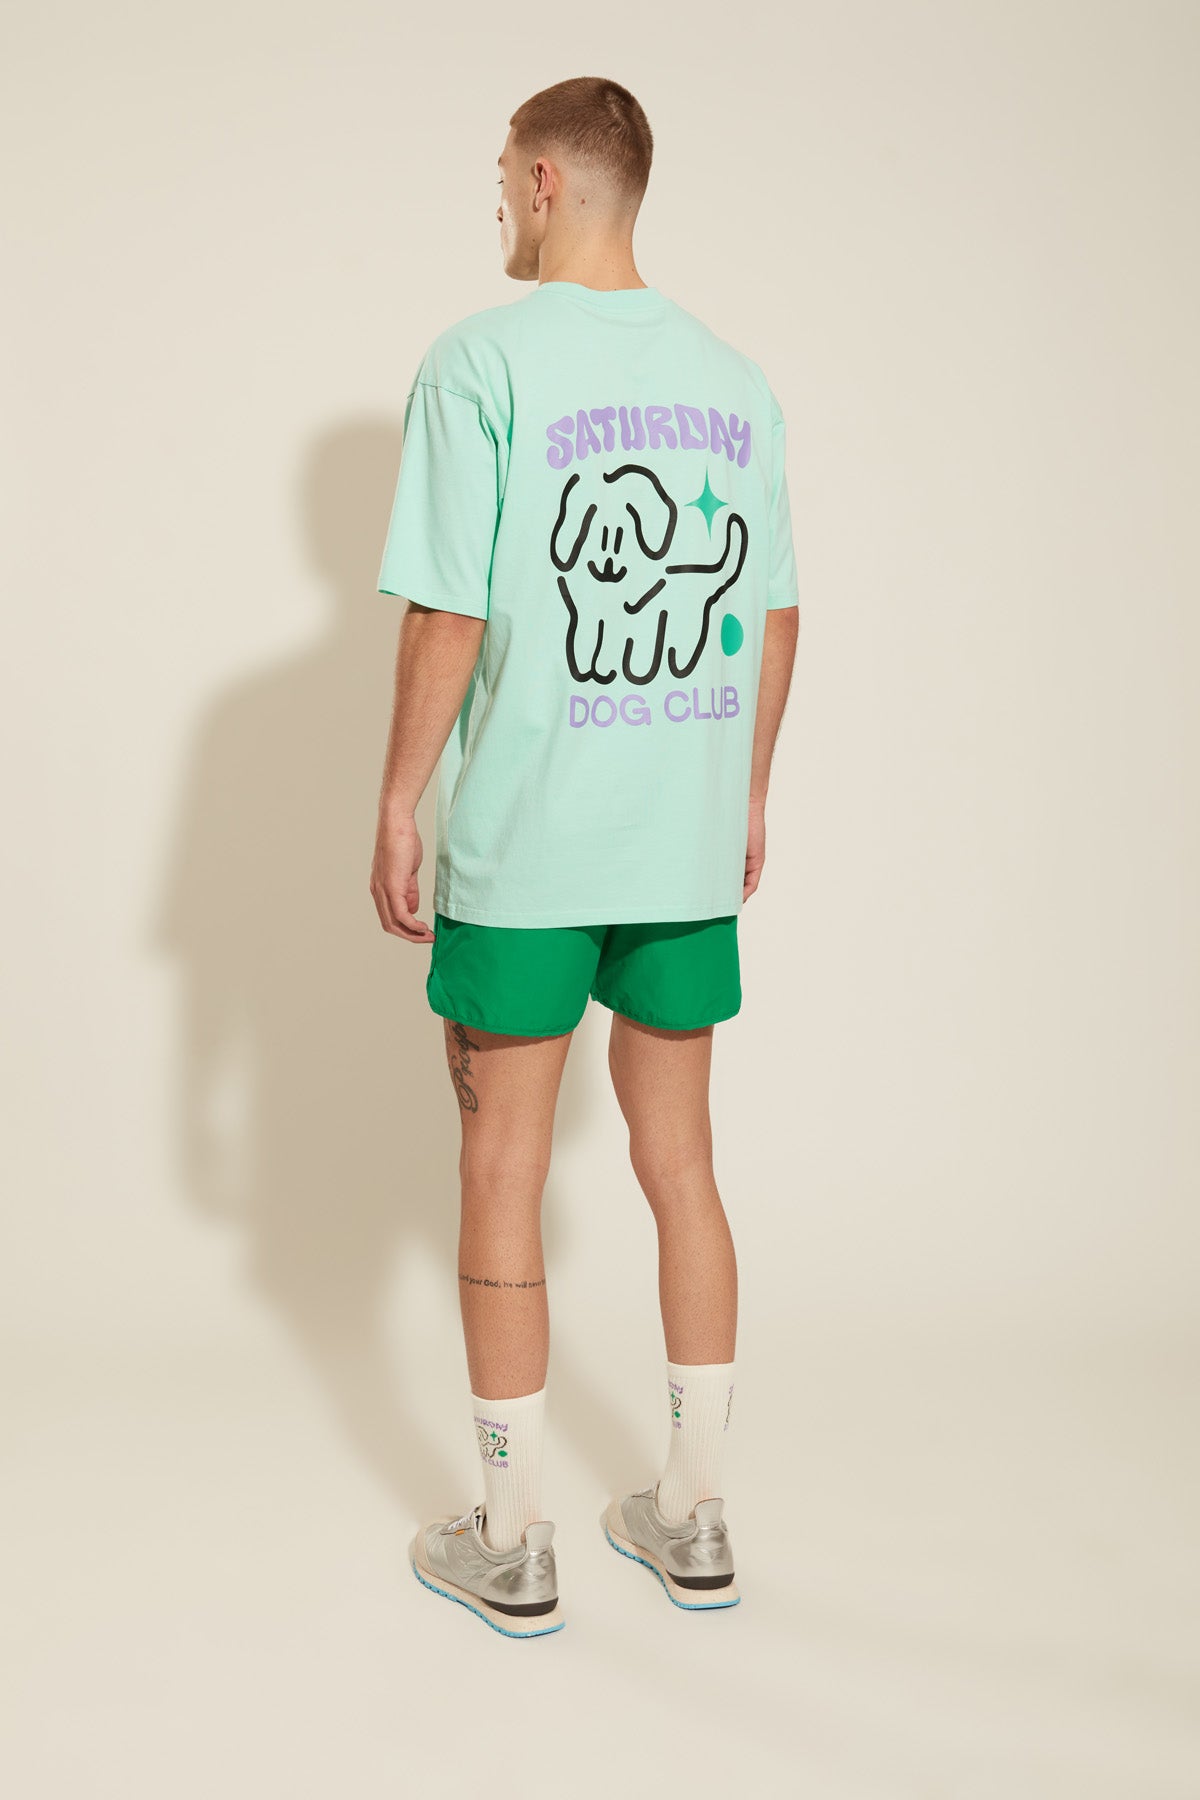 Teal Green "Saturday Dog Club" T-shirt